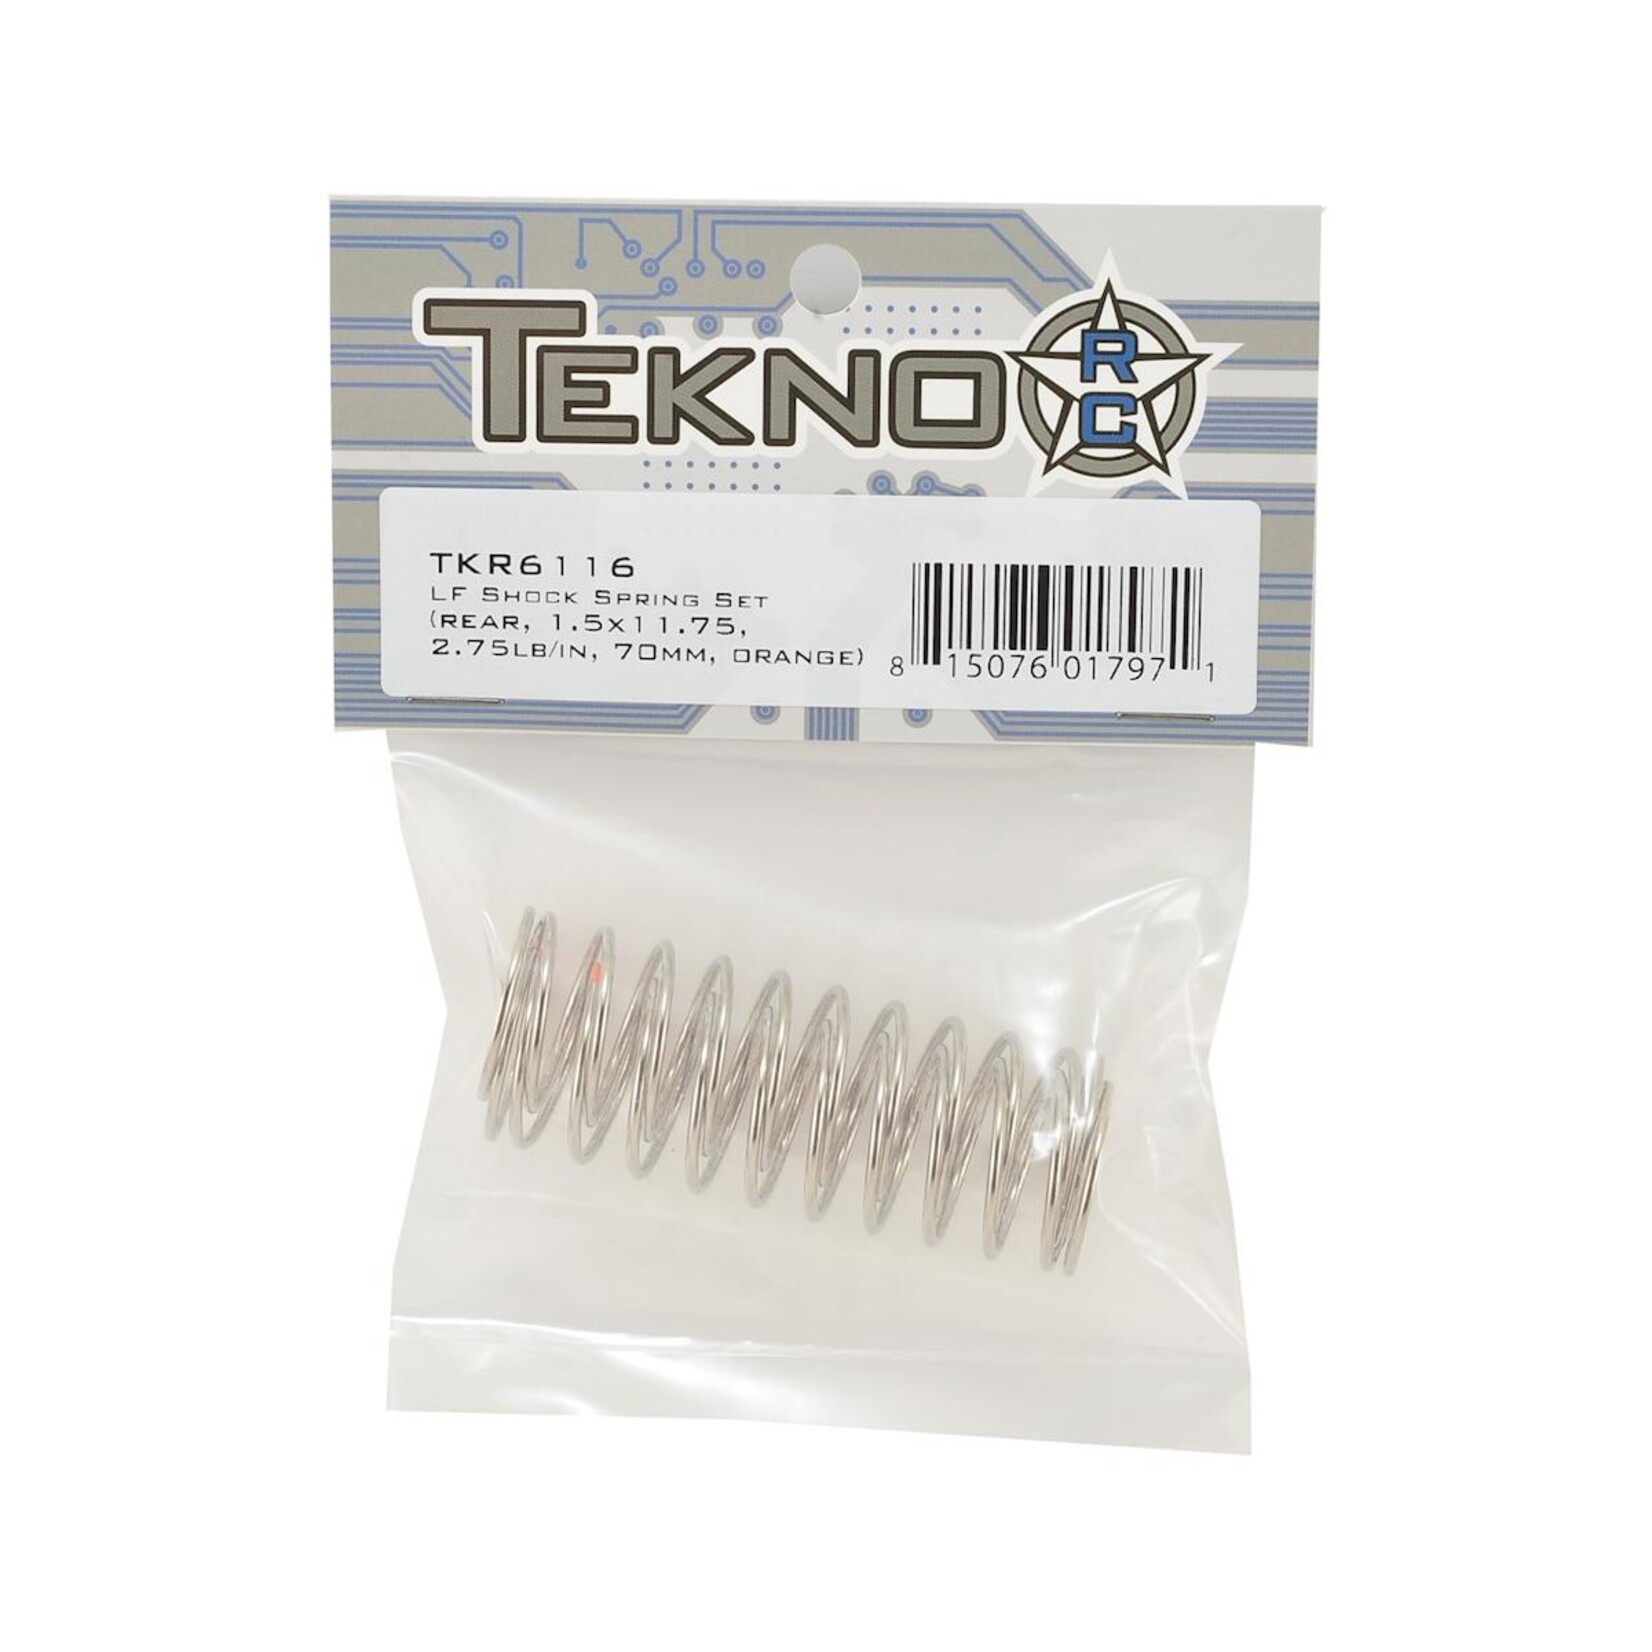 Tekno RC Tekno RC Low Frequency 70mm Rear Shock Spring Set (Orange - 2.75lb/in) 1.5x11.75) #TKR6116